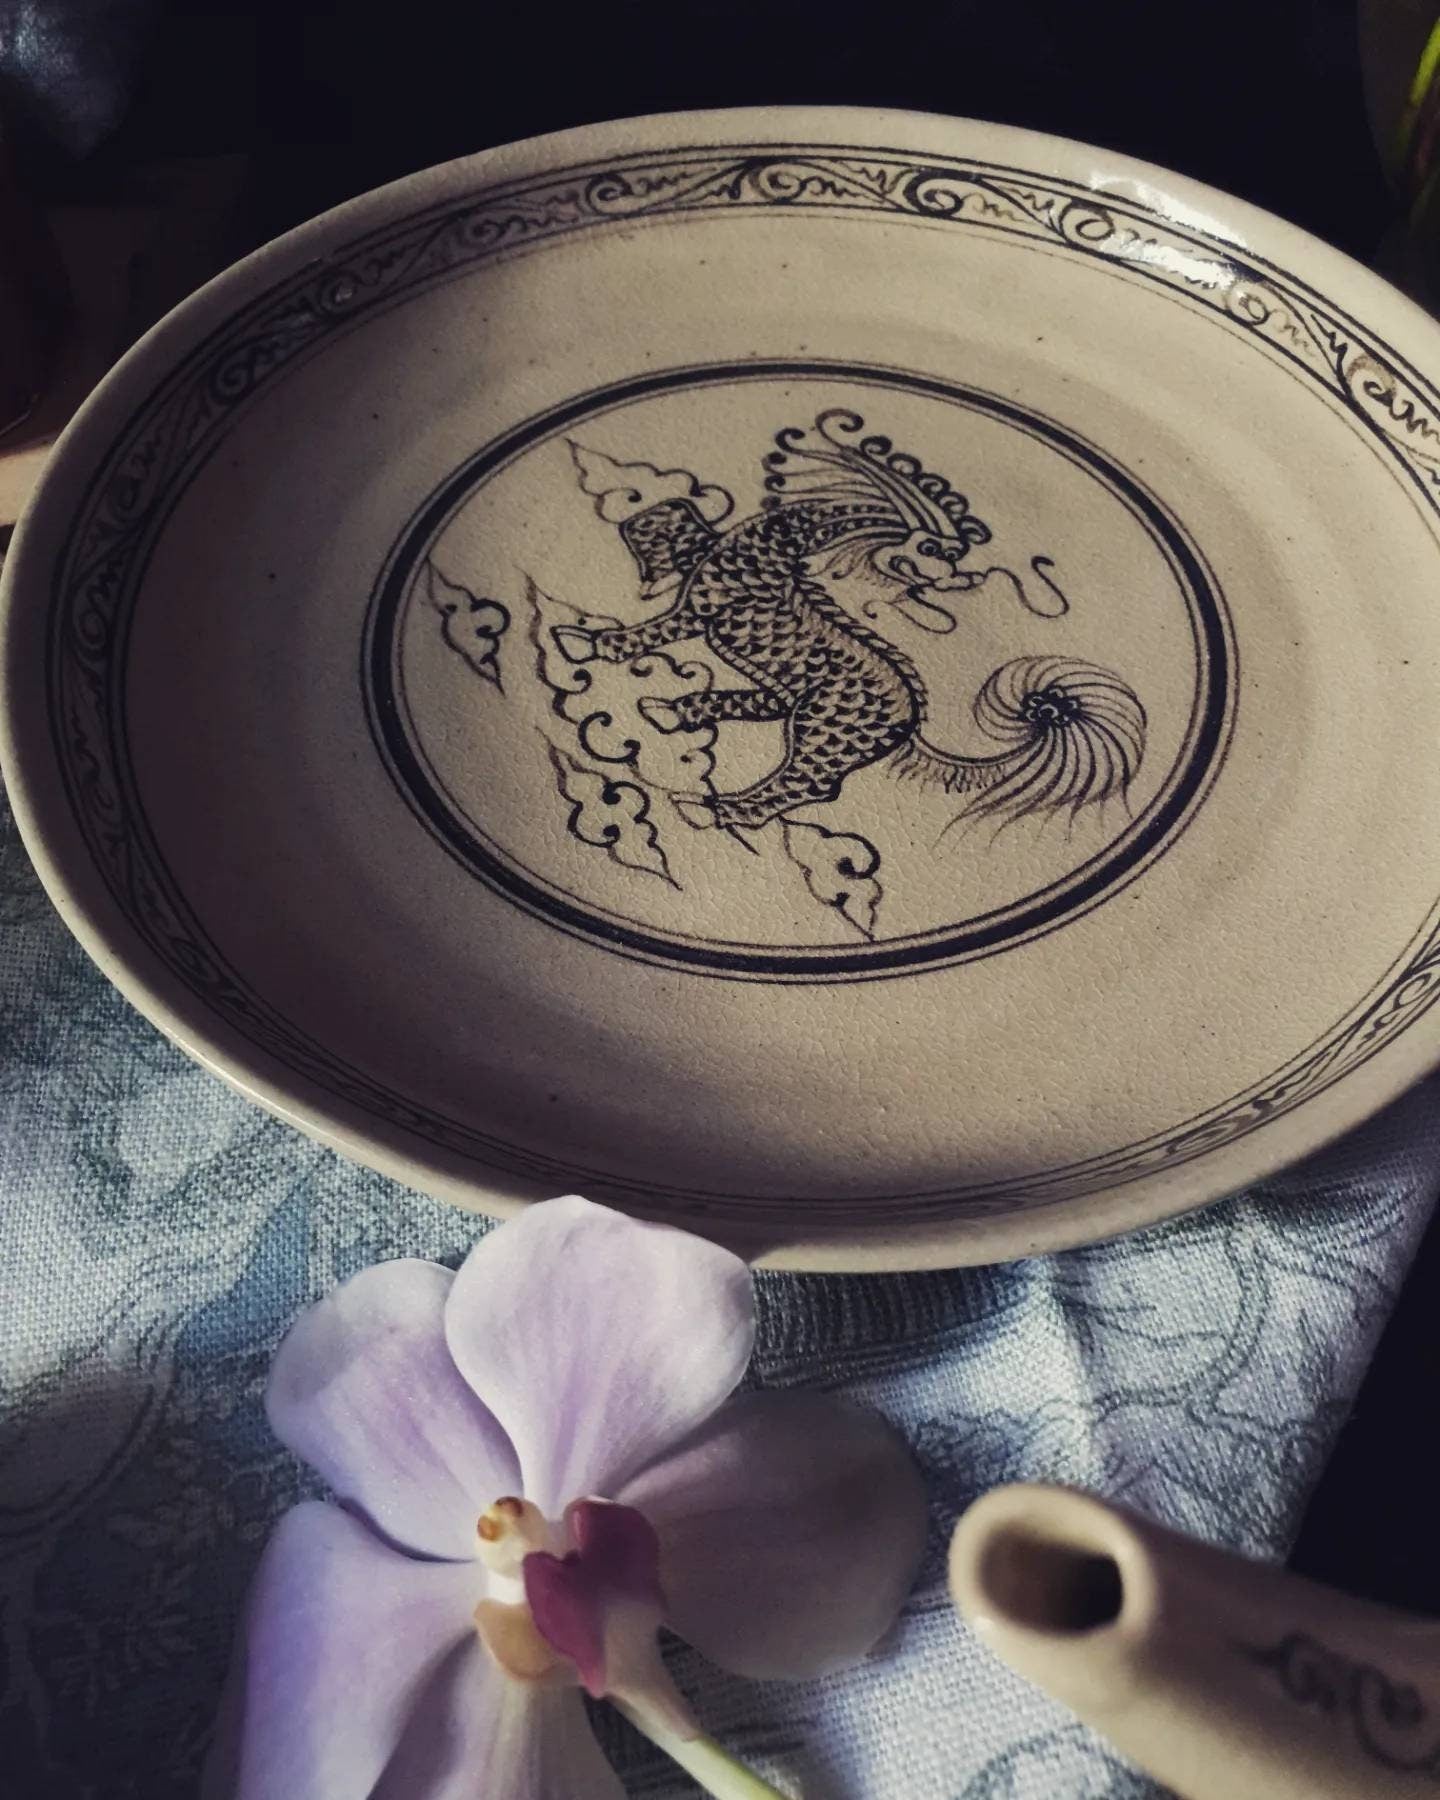 Handmade Pottery Tea Set - Hand Painted Pottery - Chinese Tea Set - handmade pottery - handmade tea pot - Artisan Pottery - Wedding Gift